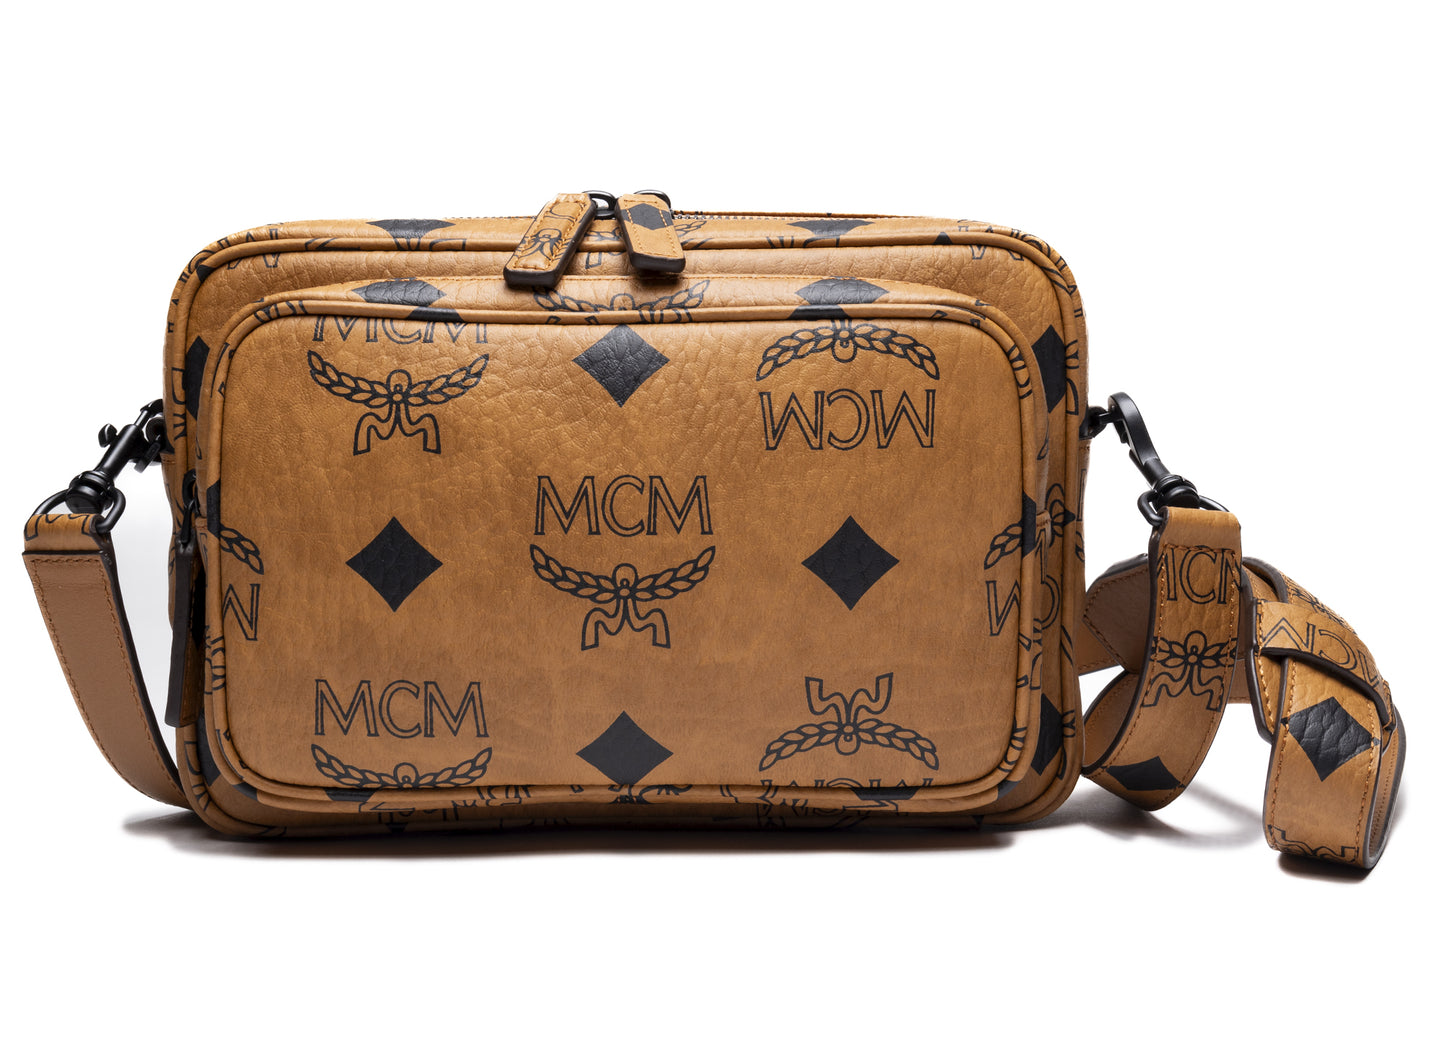 Mcm Aren Small Monogram Leather Hobo Bag Black